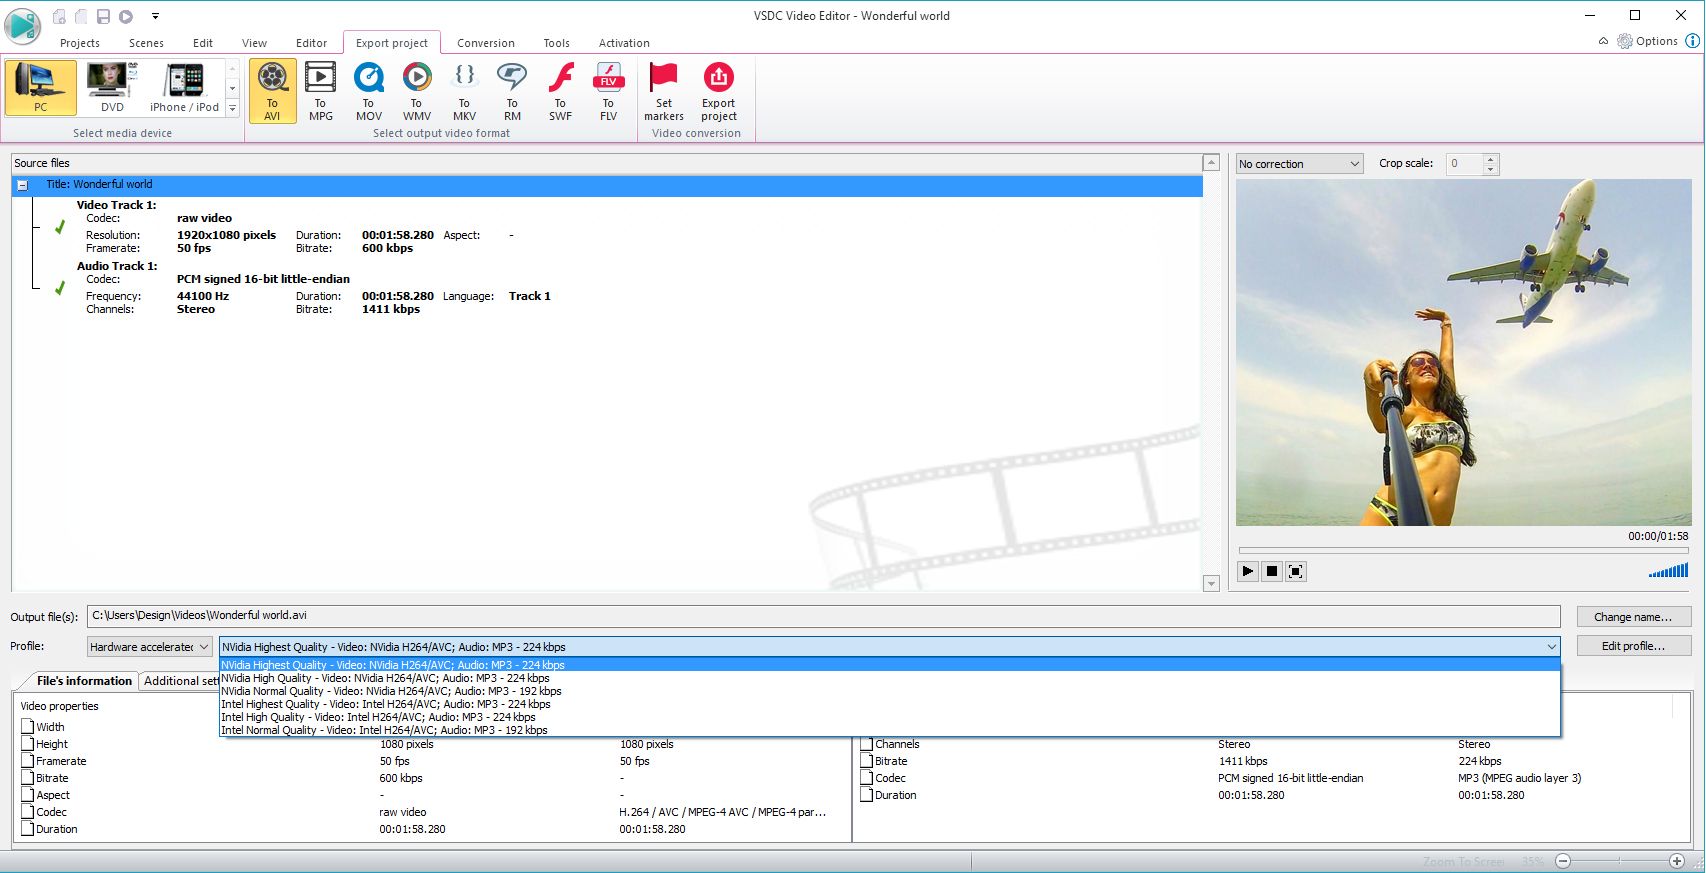 vsdc free video editor 32 bit download